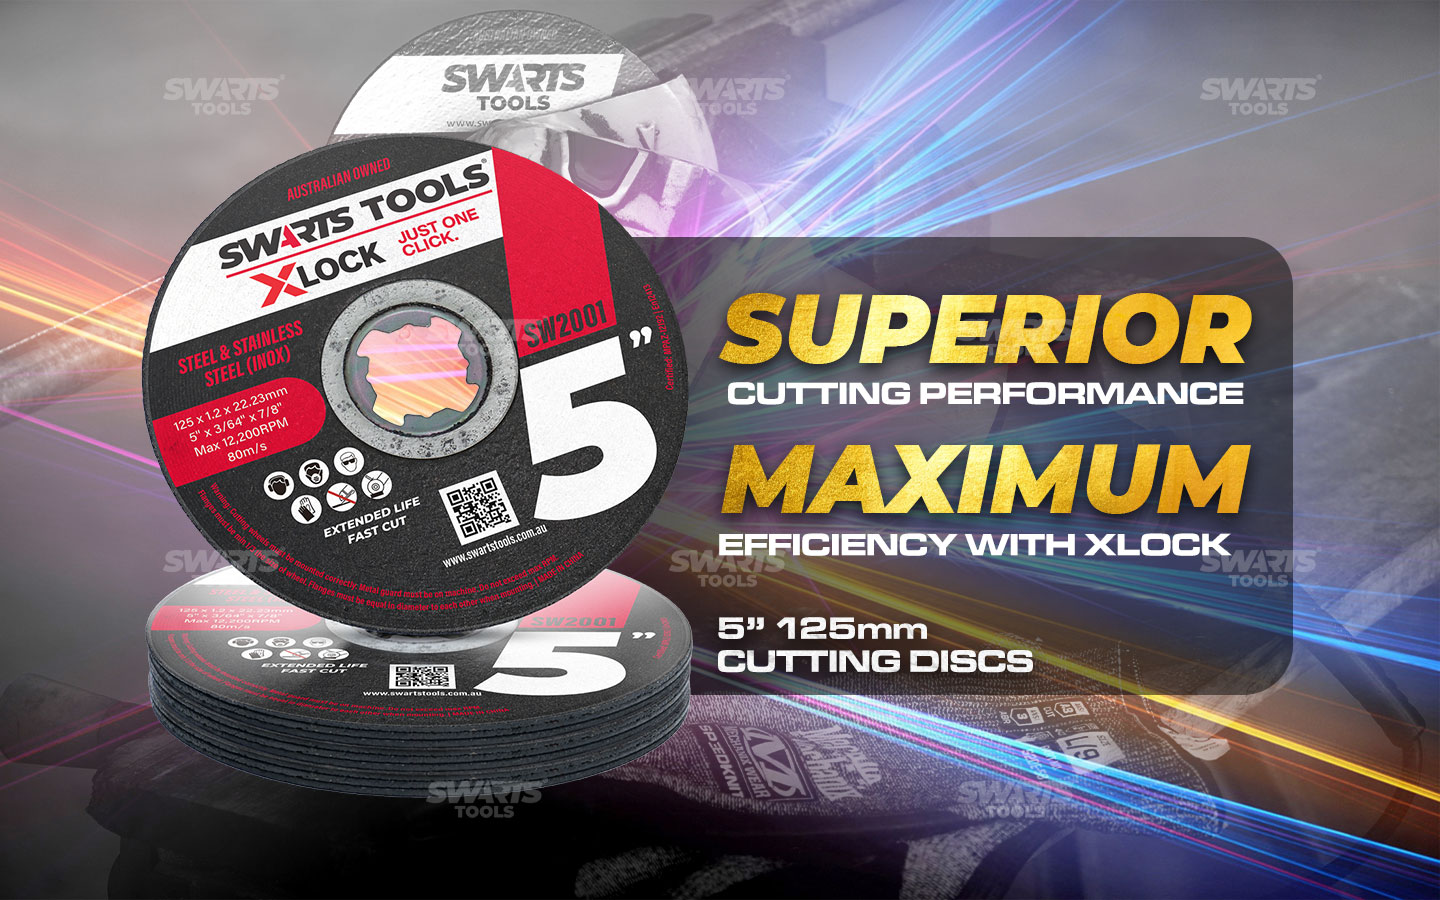 Superior cutting performance, Maximum efficiency with xlock